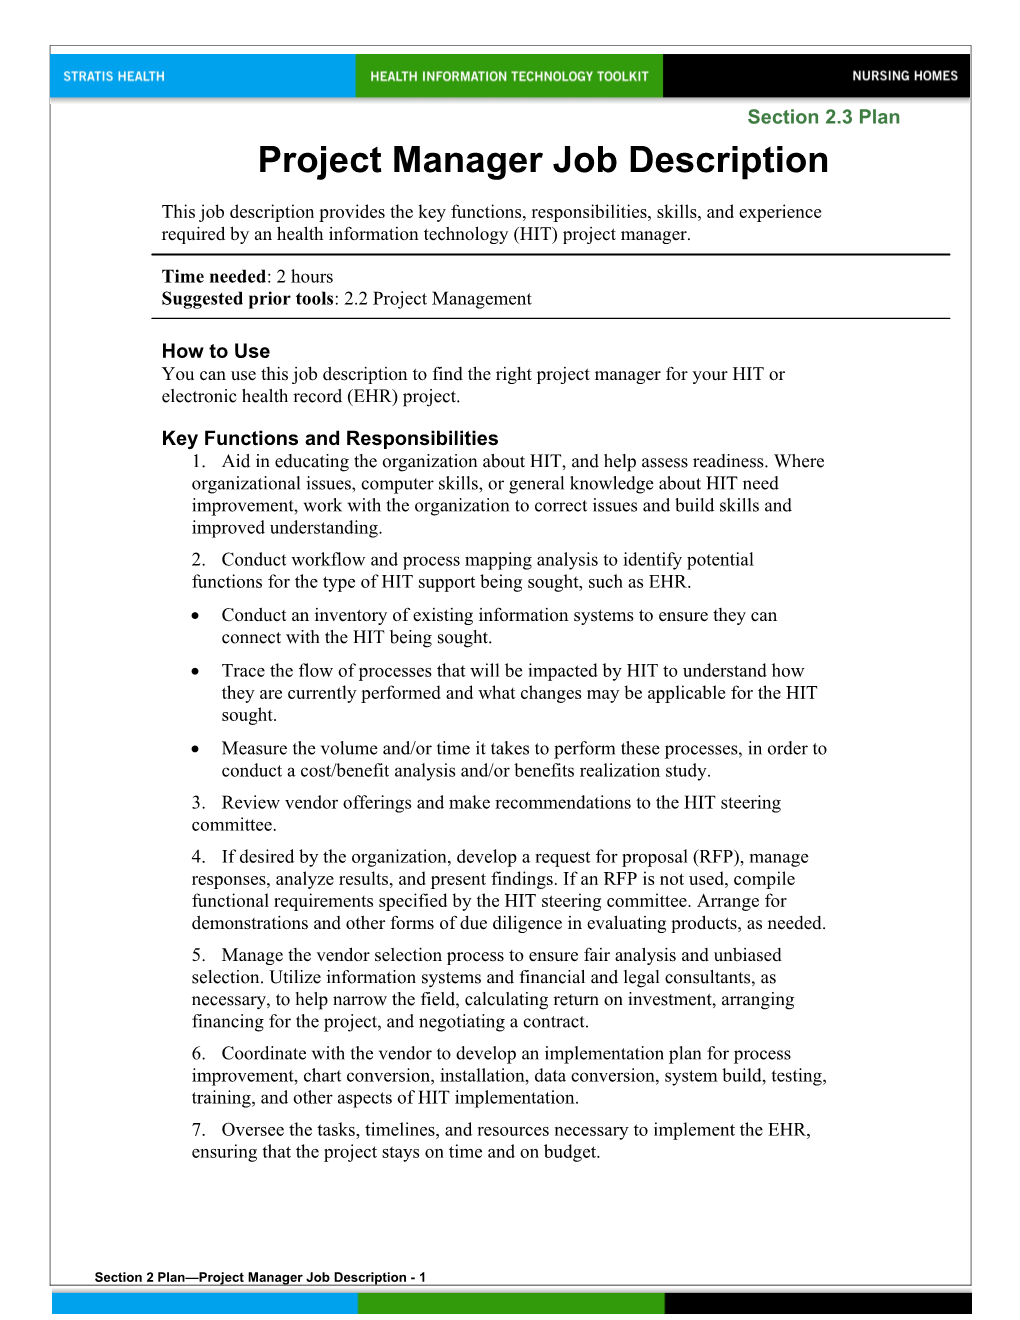 2 Project Manager Job Description